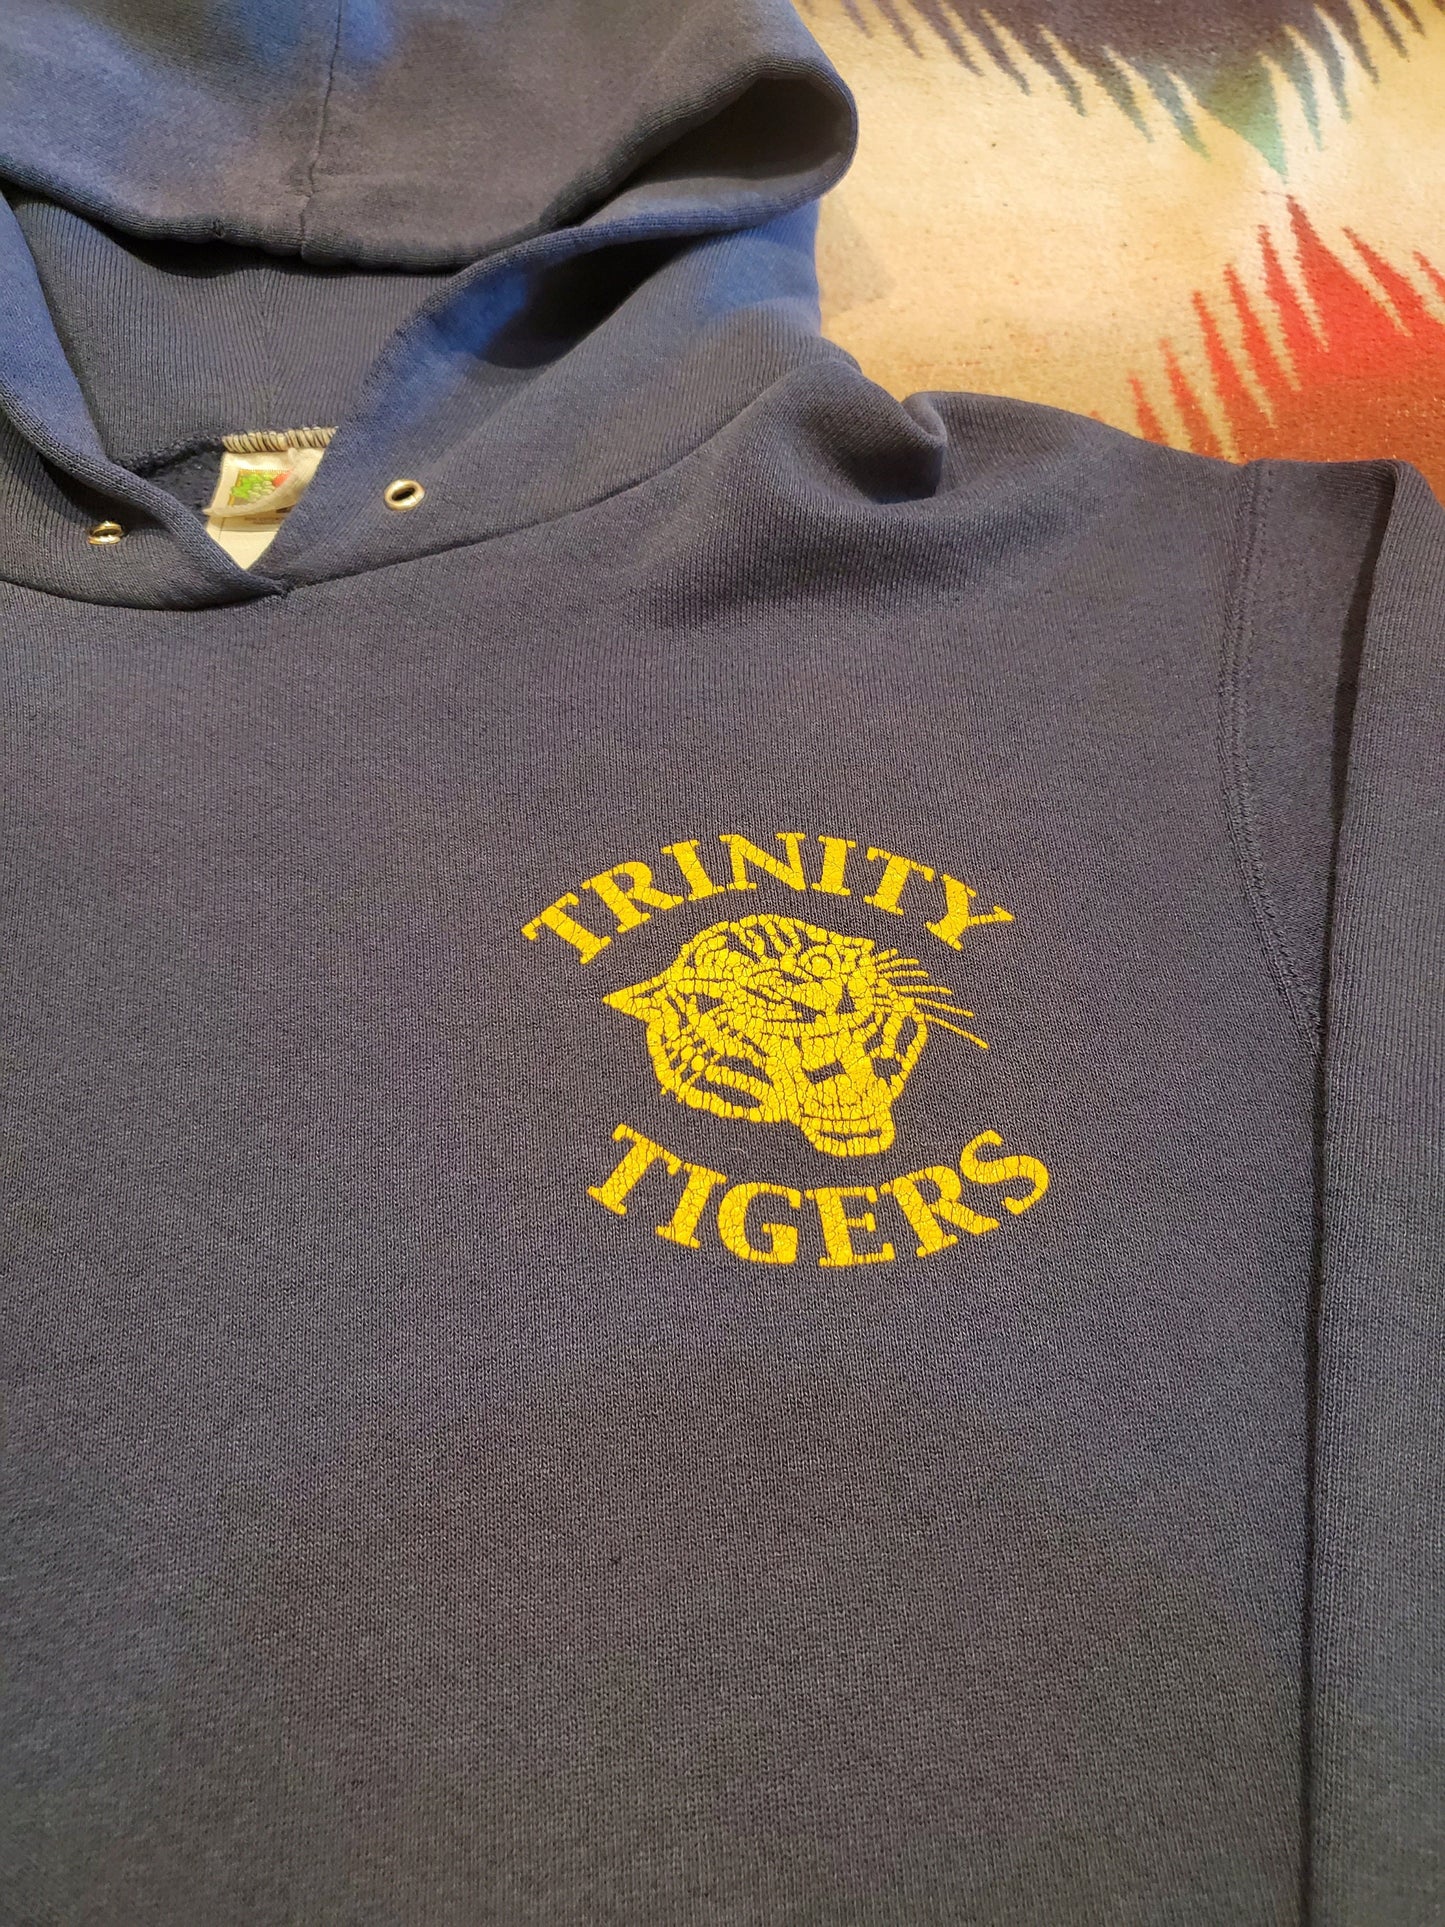 1990s/2000s Distressed Trinity Tigers Hoodie Sweatshirt Size S